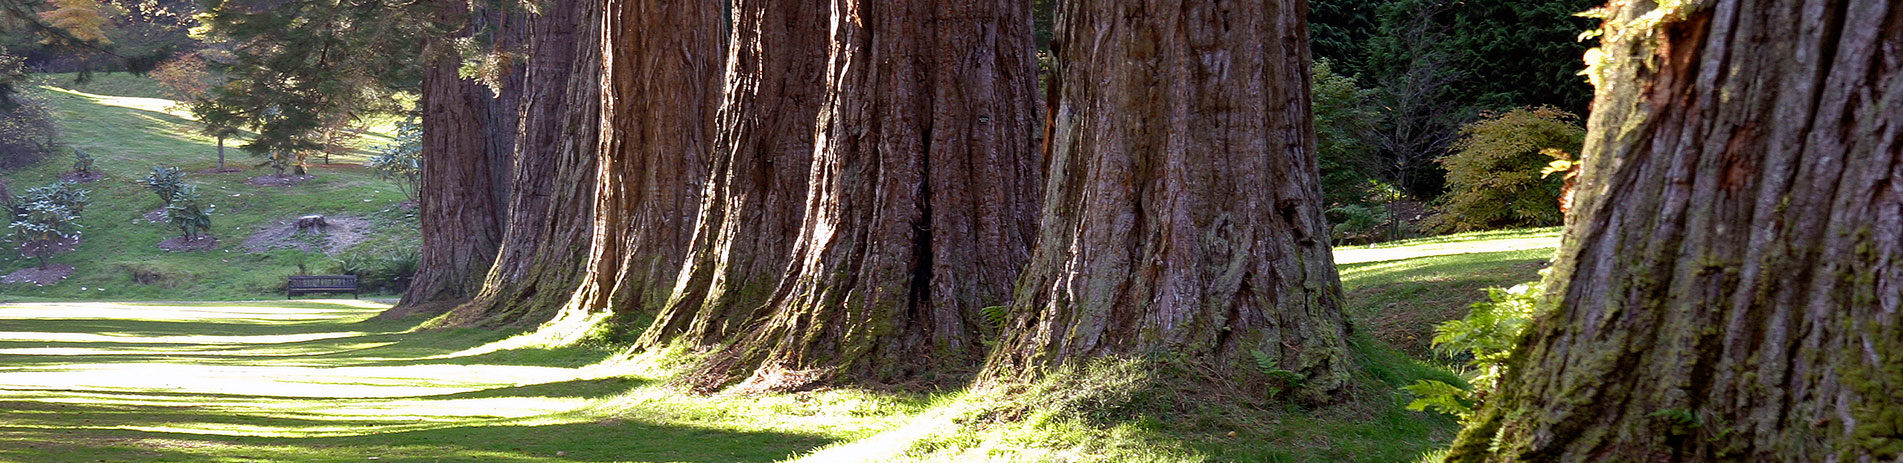 large-tree-trunks-benmore-gardens